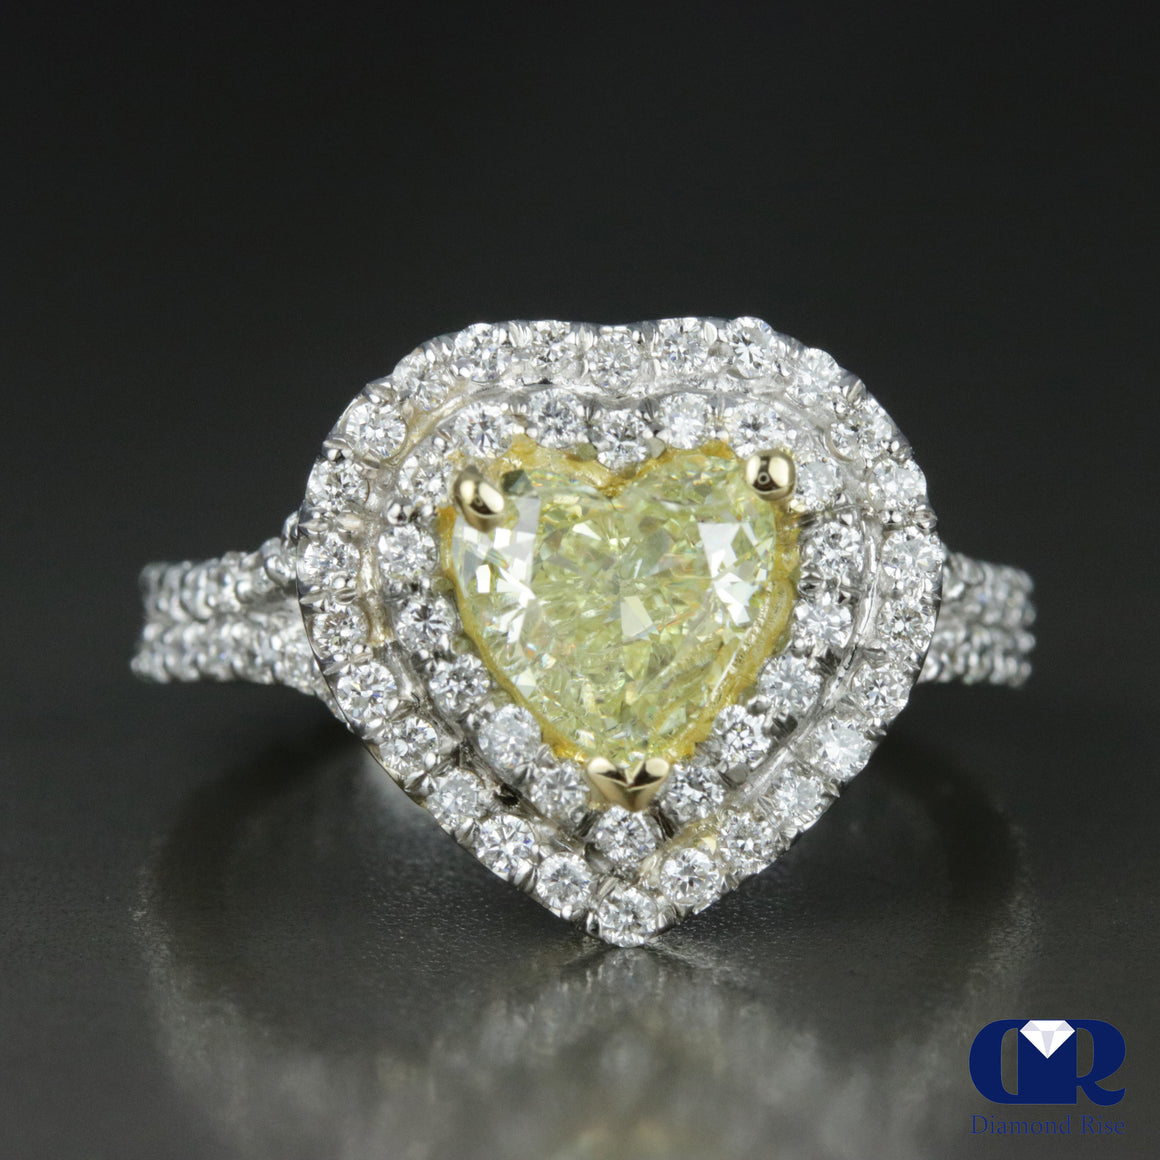 2.27 Carat Heart Shaped Fancy Yellow Diamond Double Halo Engagement Ring 14K White Gold - Diamond Rise Jewelry